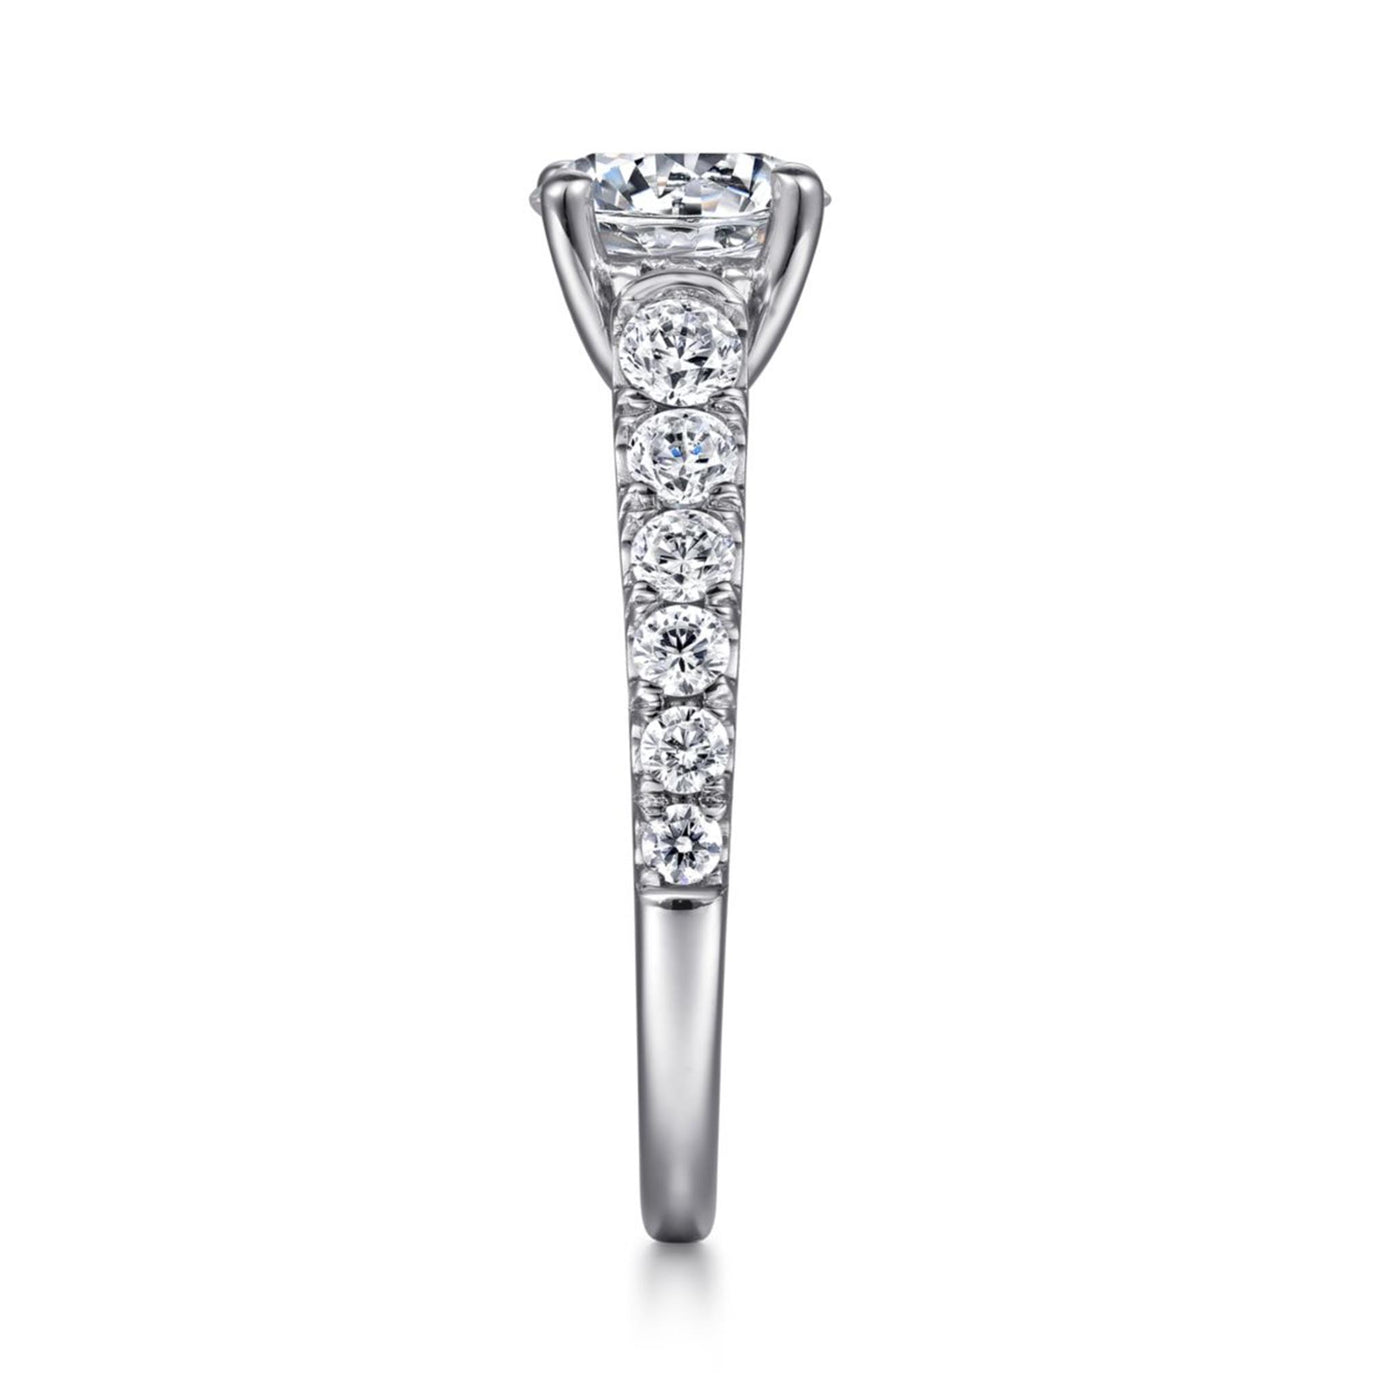 Gabriel 14K White Gold .76ctw 4 Prong Style Diamond Semi-Mount Engagement Ring